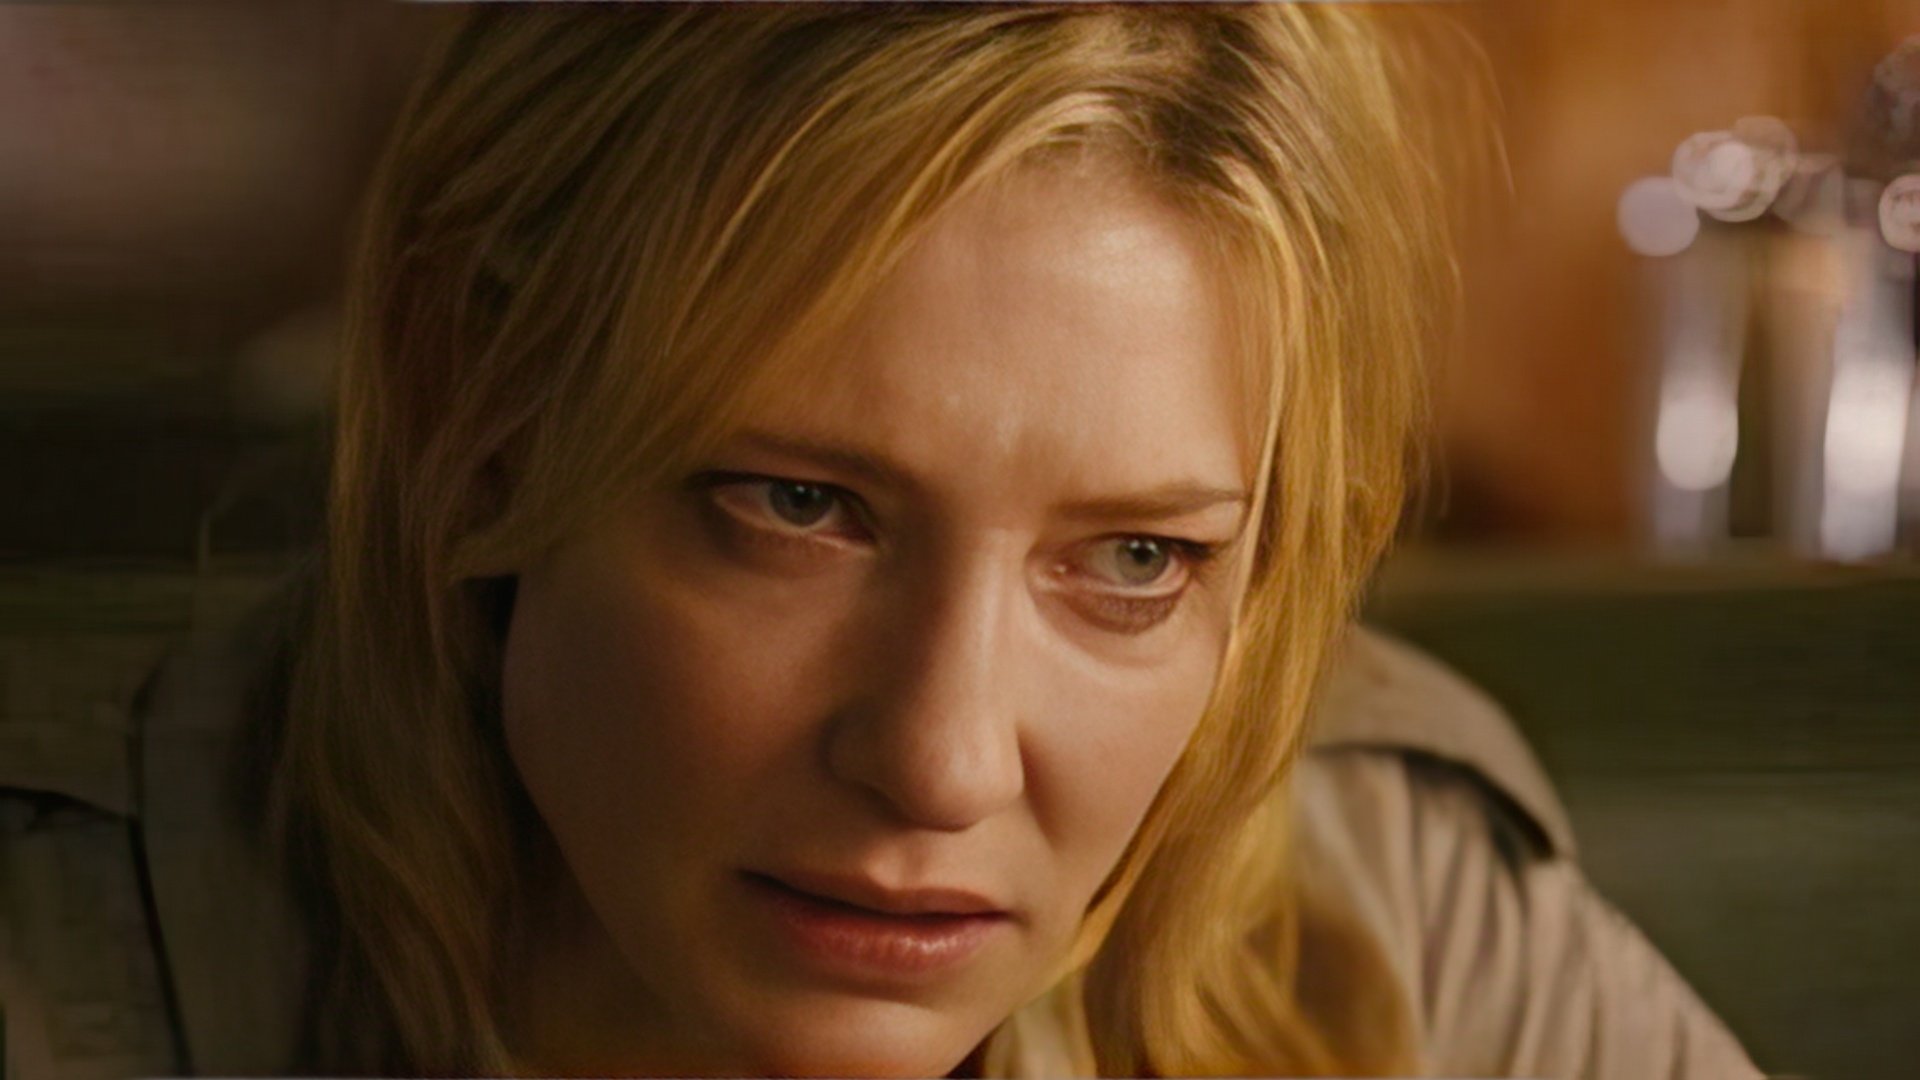 The film «Blue Jasmine» brought Cate Blanchett her second Oscar